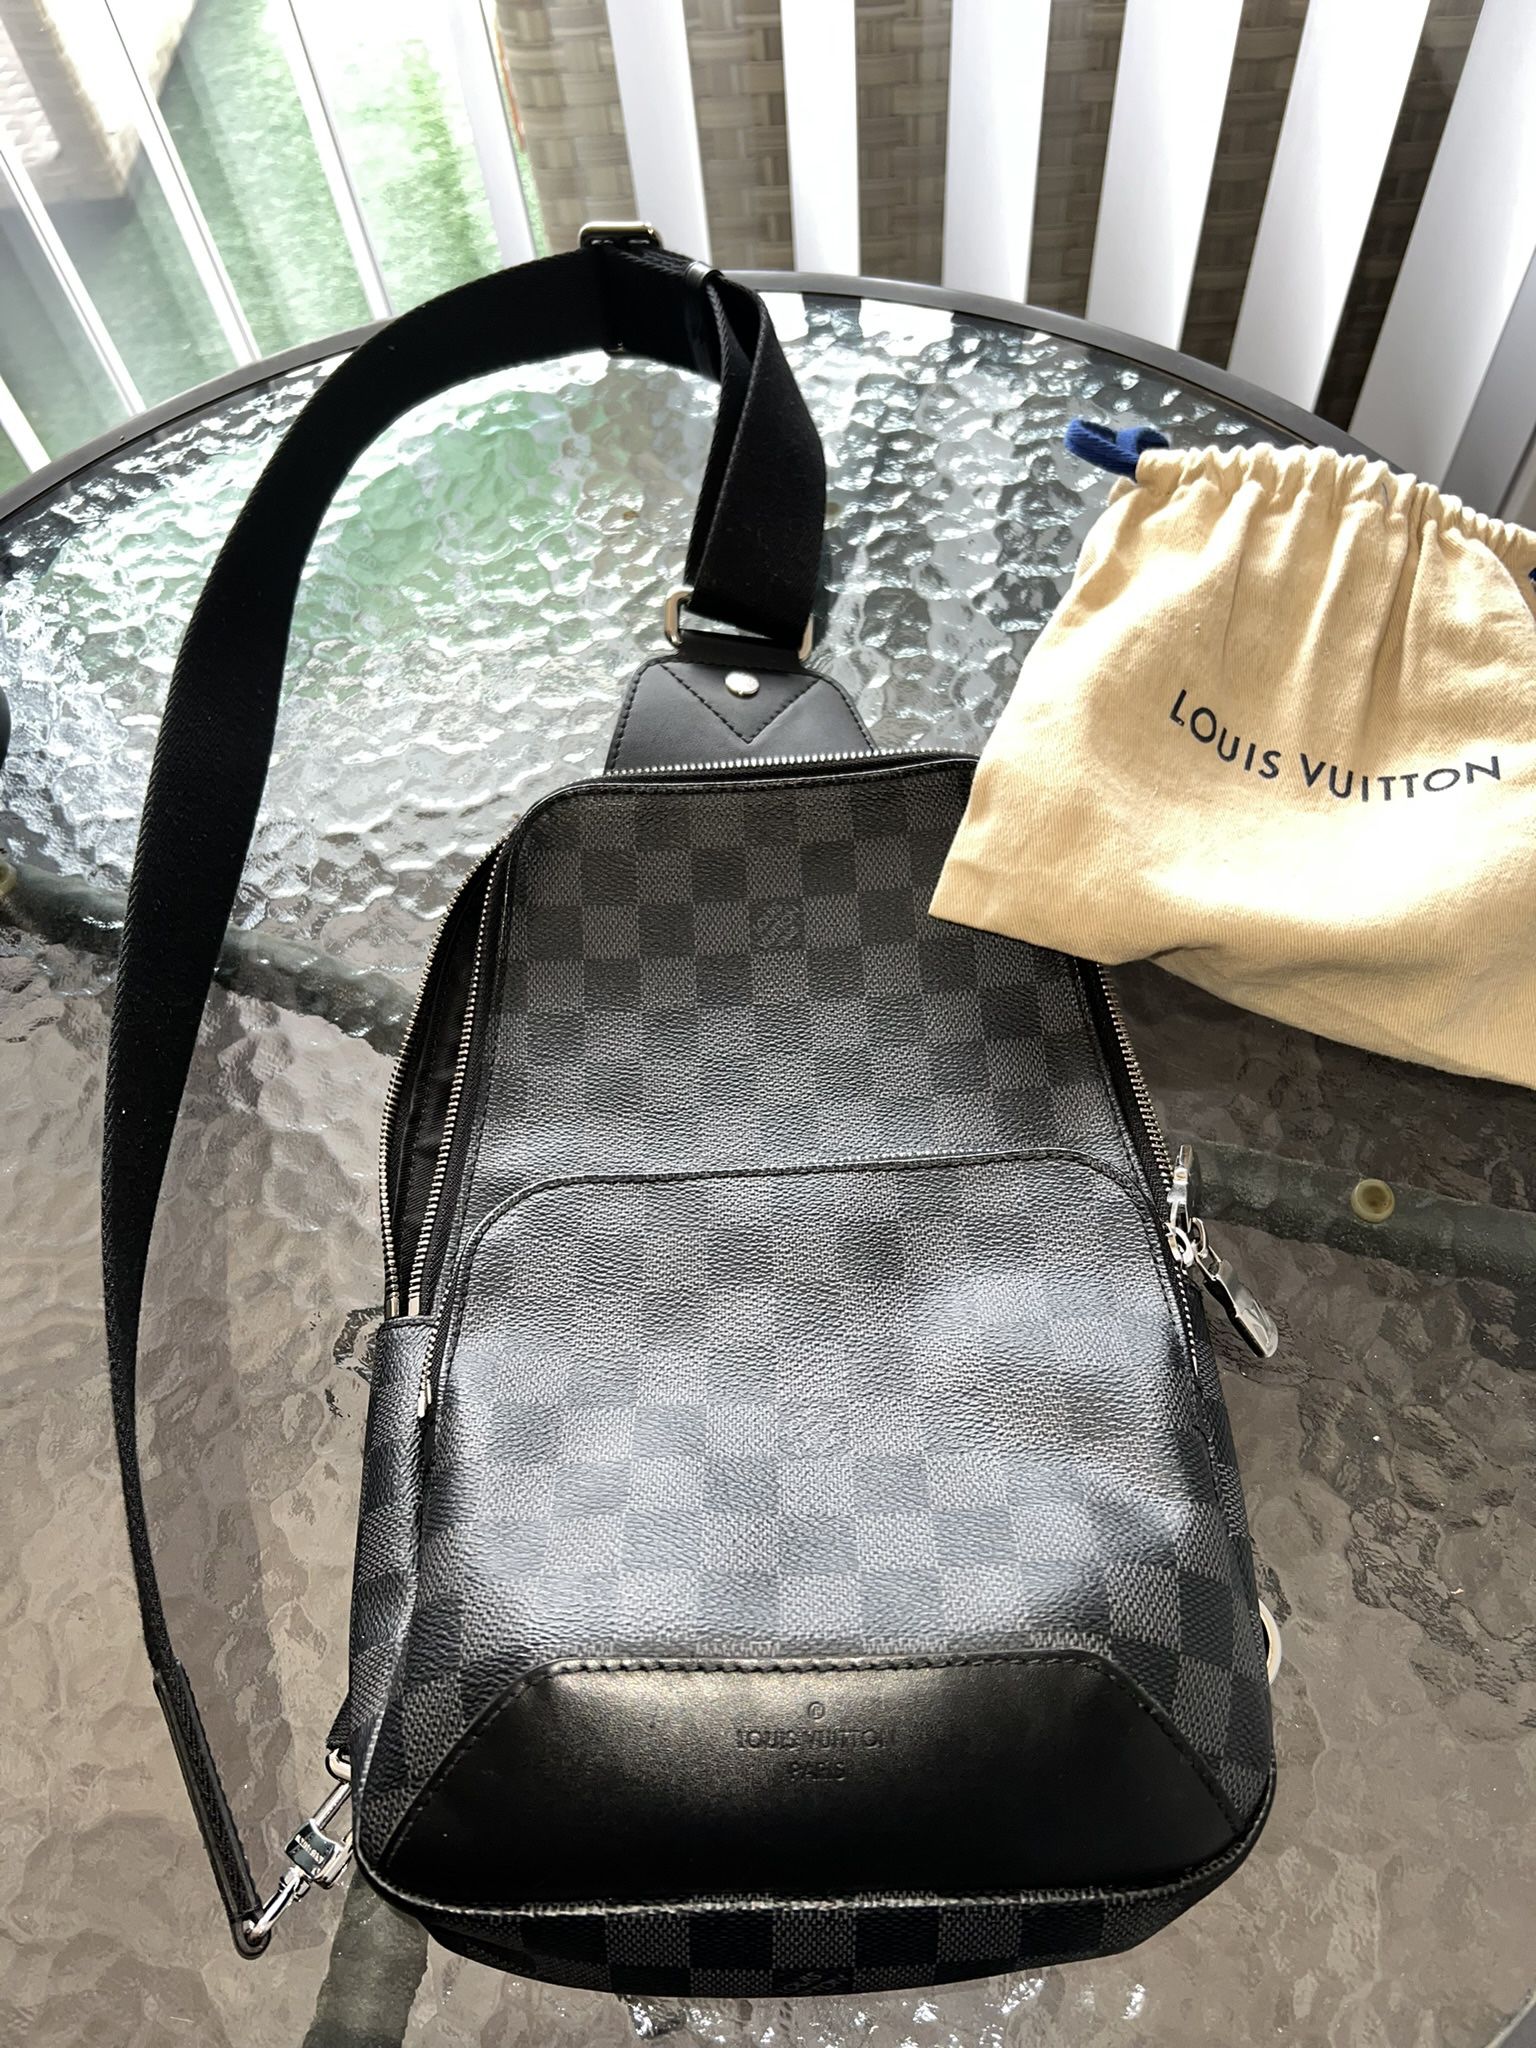 Louis Vuitton messenger Bag